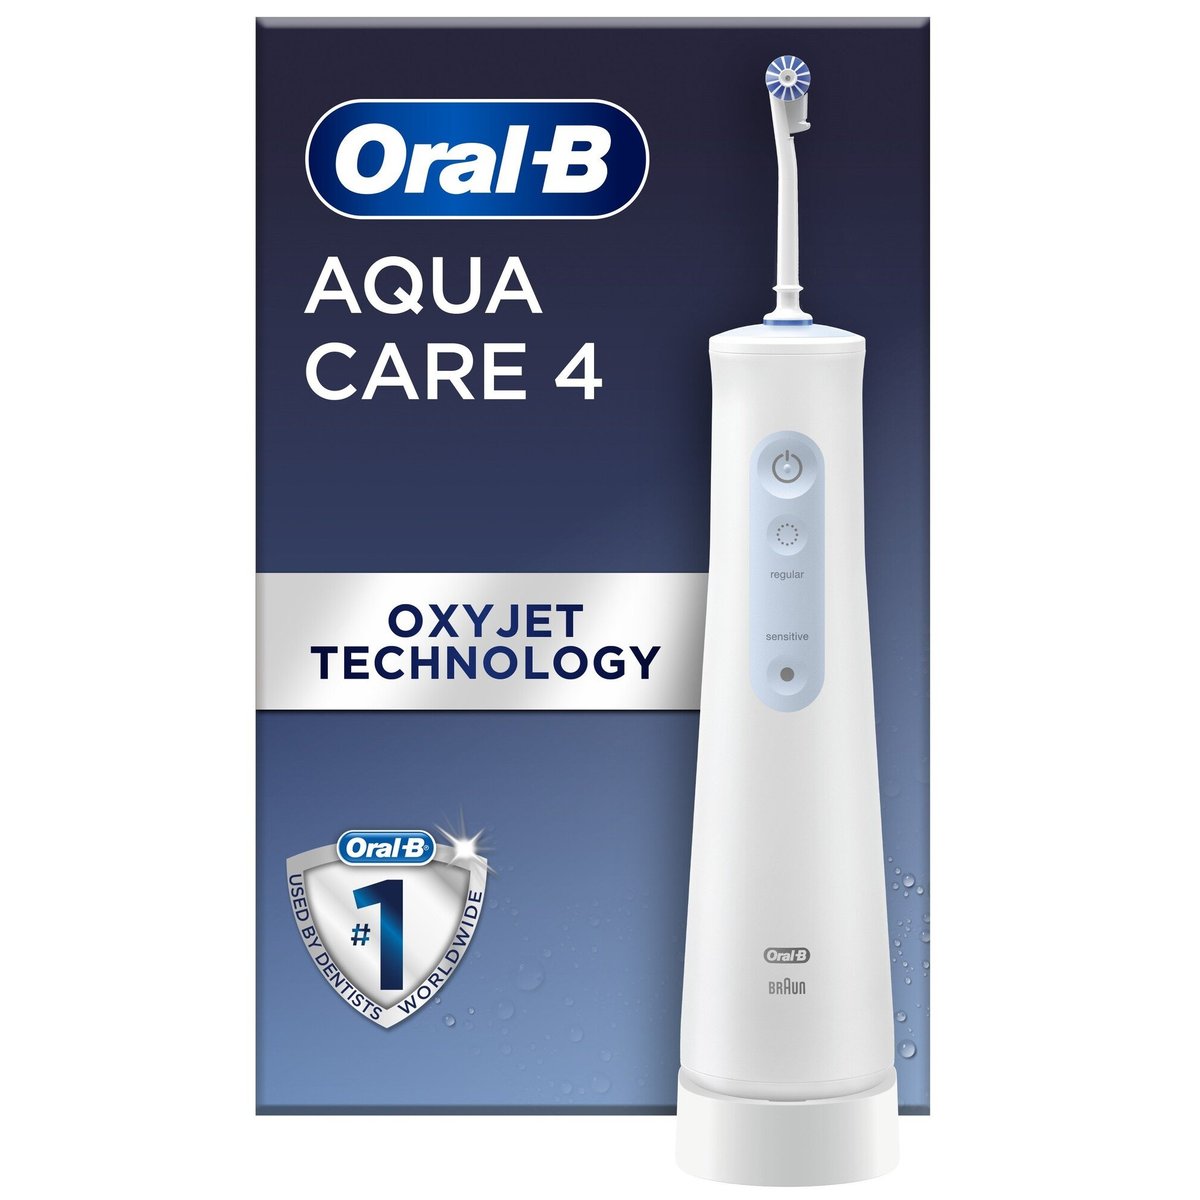 Oral-B AquaCare Series 4 ústní sprcha Oxyjet